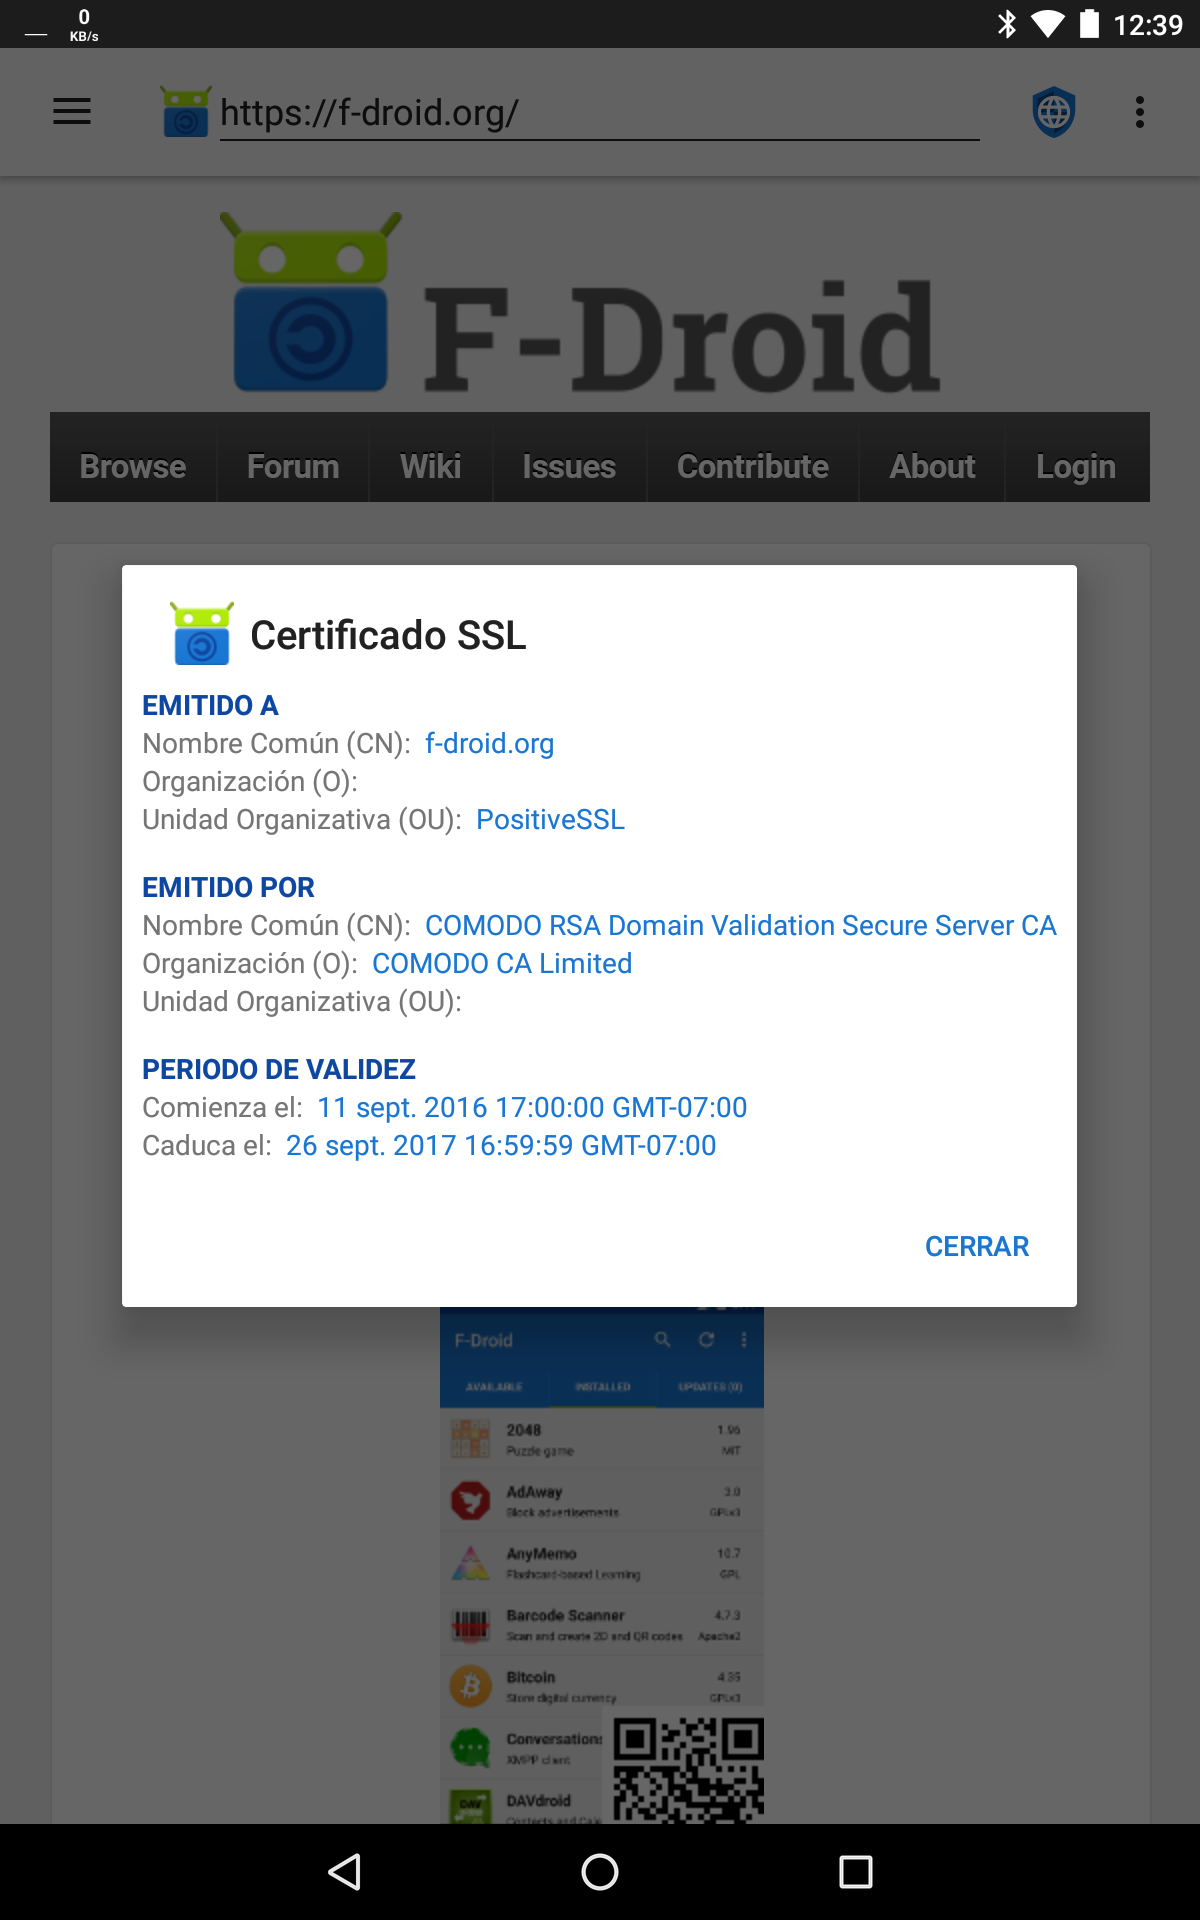 fastlane/metadata/android/es/sevenInchScreenshots/01 - View SSL Certificate.png